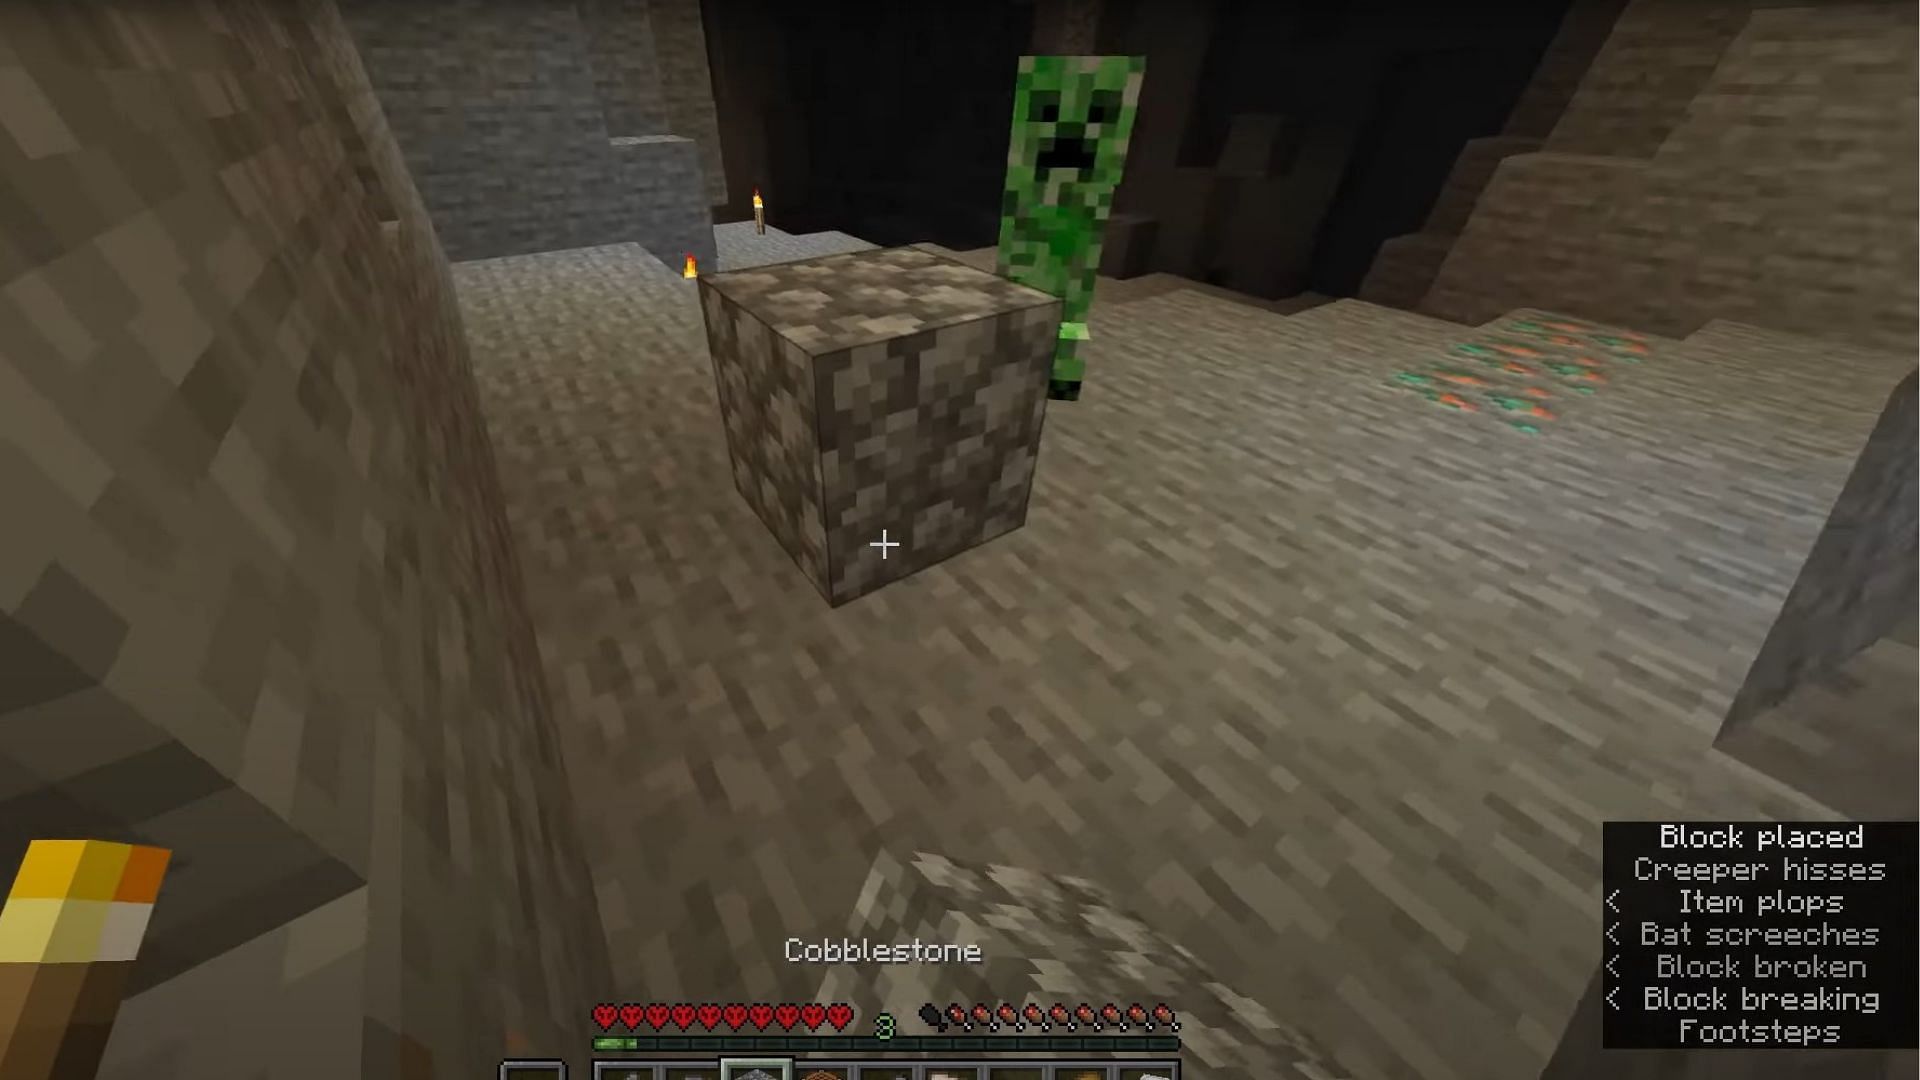 Beware of Creepers in Minecraft (Image via Mojang Studios)